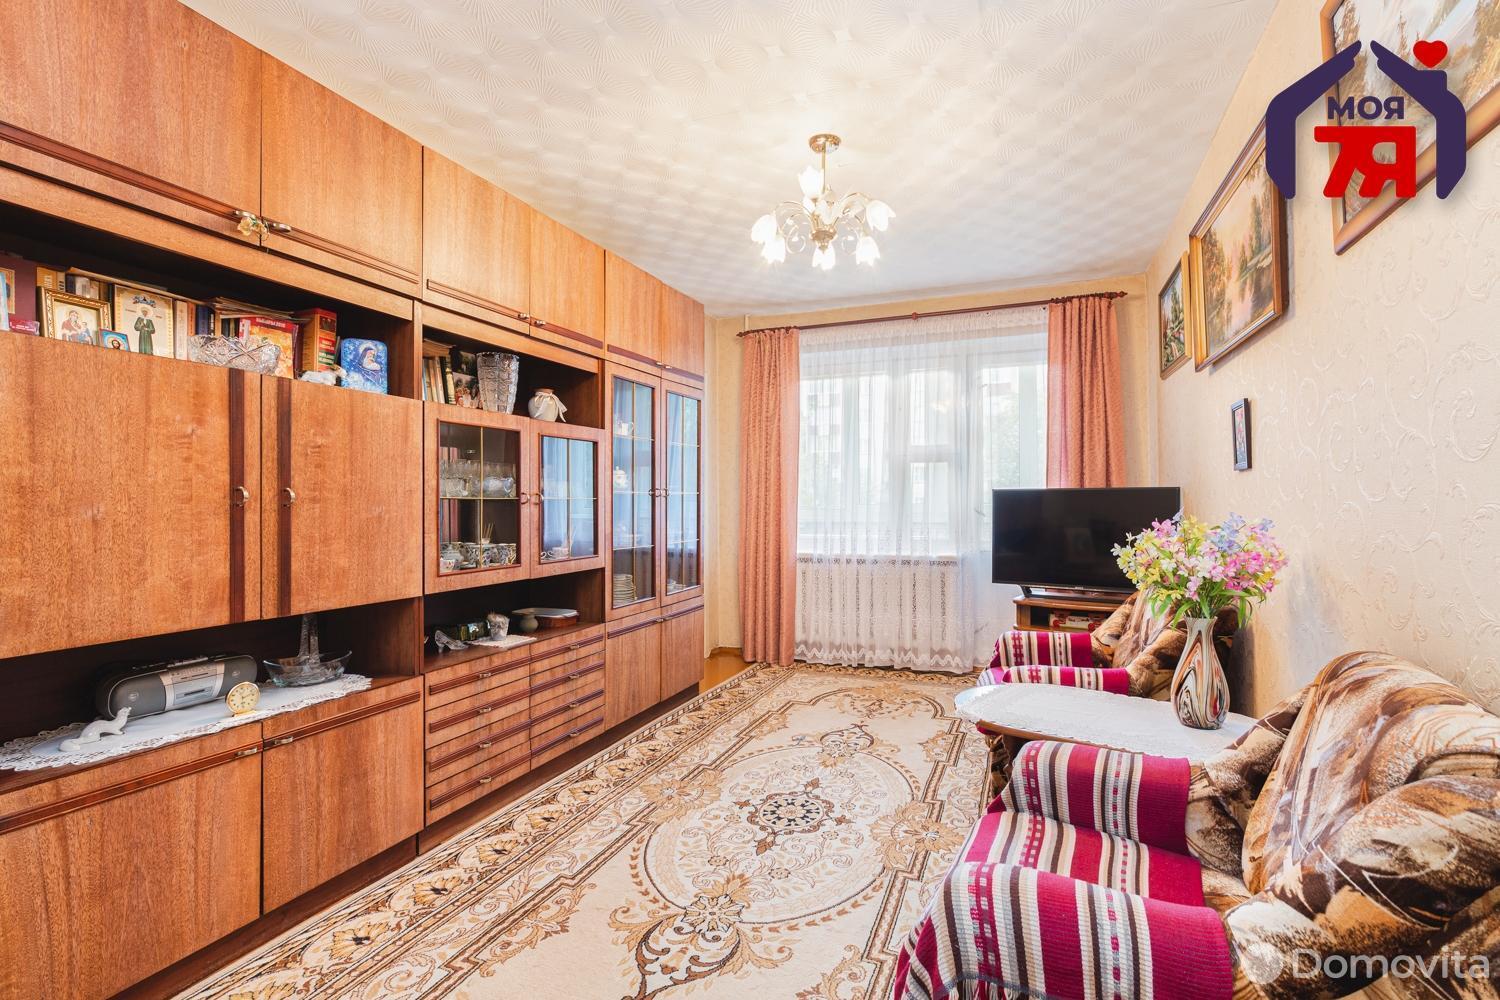 квартира, Минск, ул. Матусевича, д. 6, стоимость продажи 187 990 р.